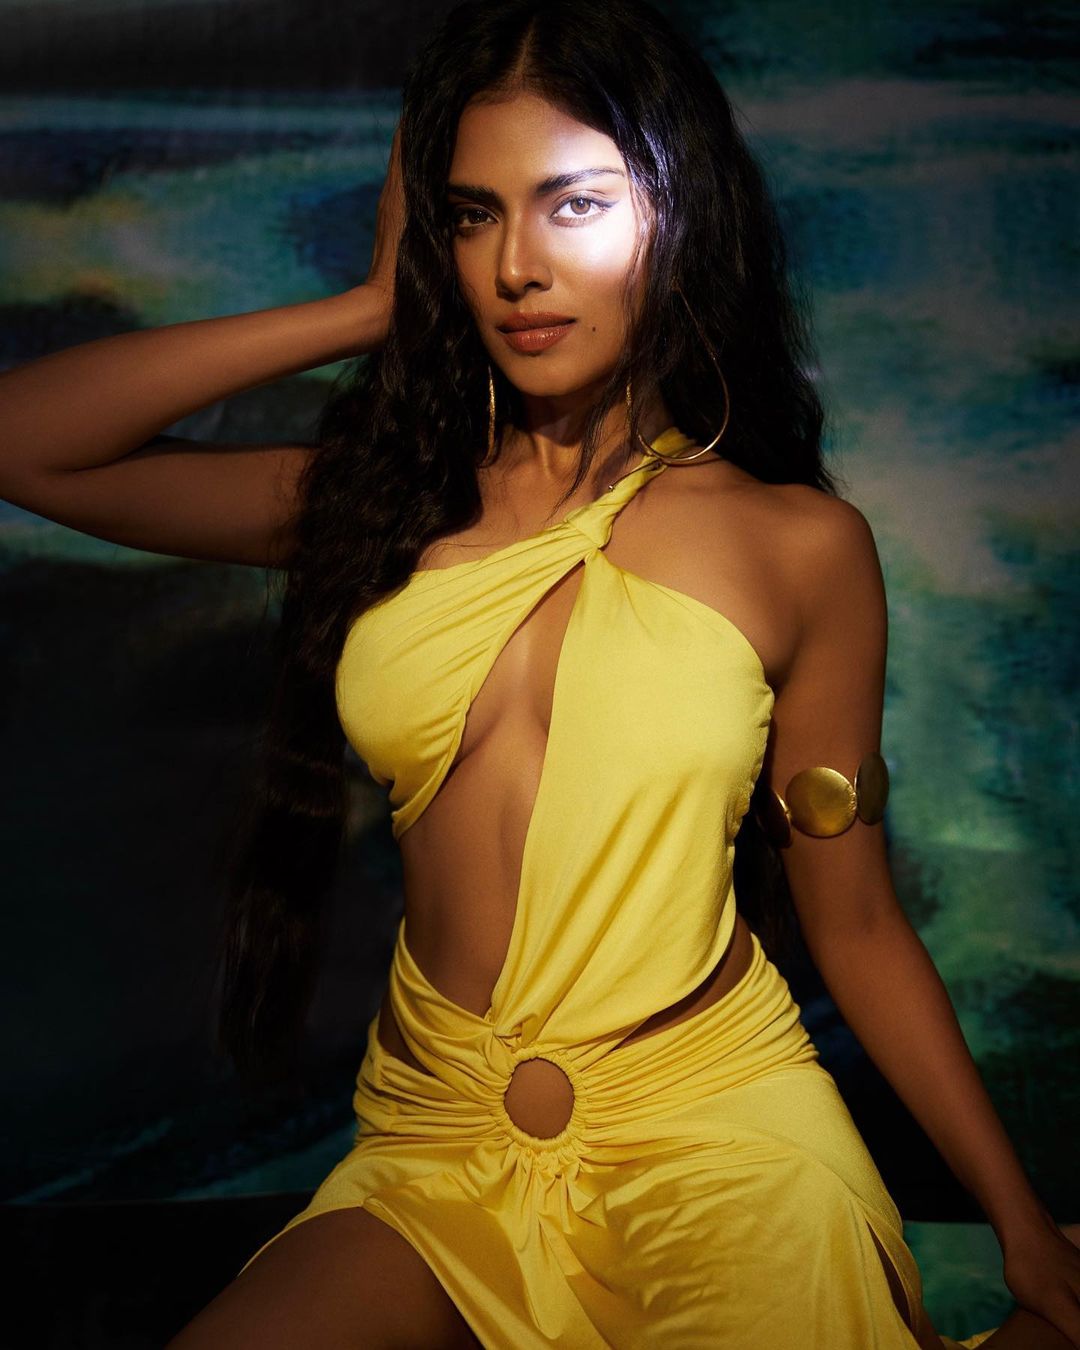 malavika mohanan hot photos in glamour yellow dress getting viral on social media